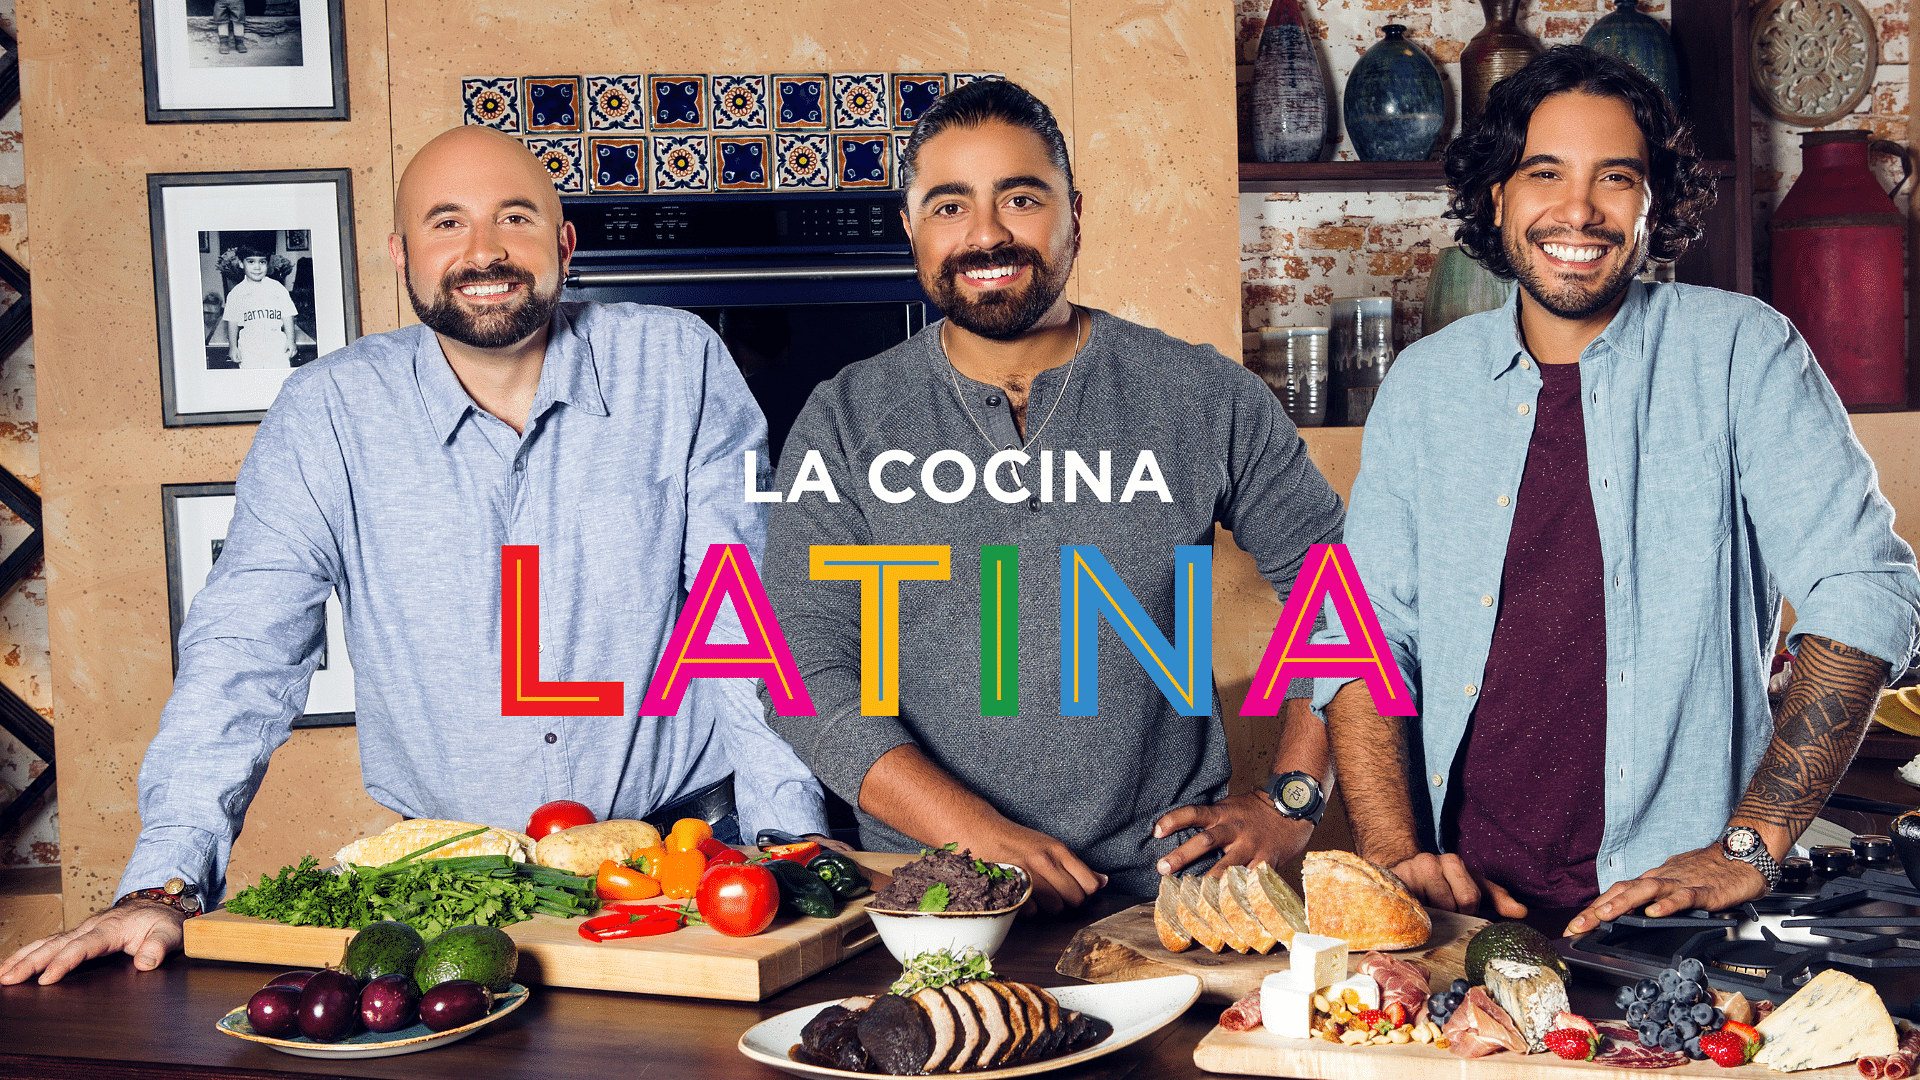 La cocina latina